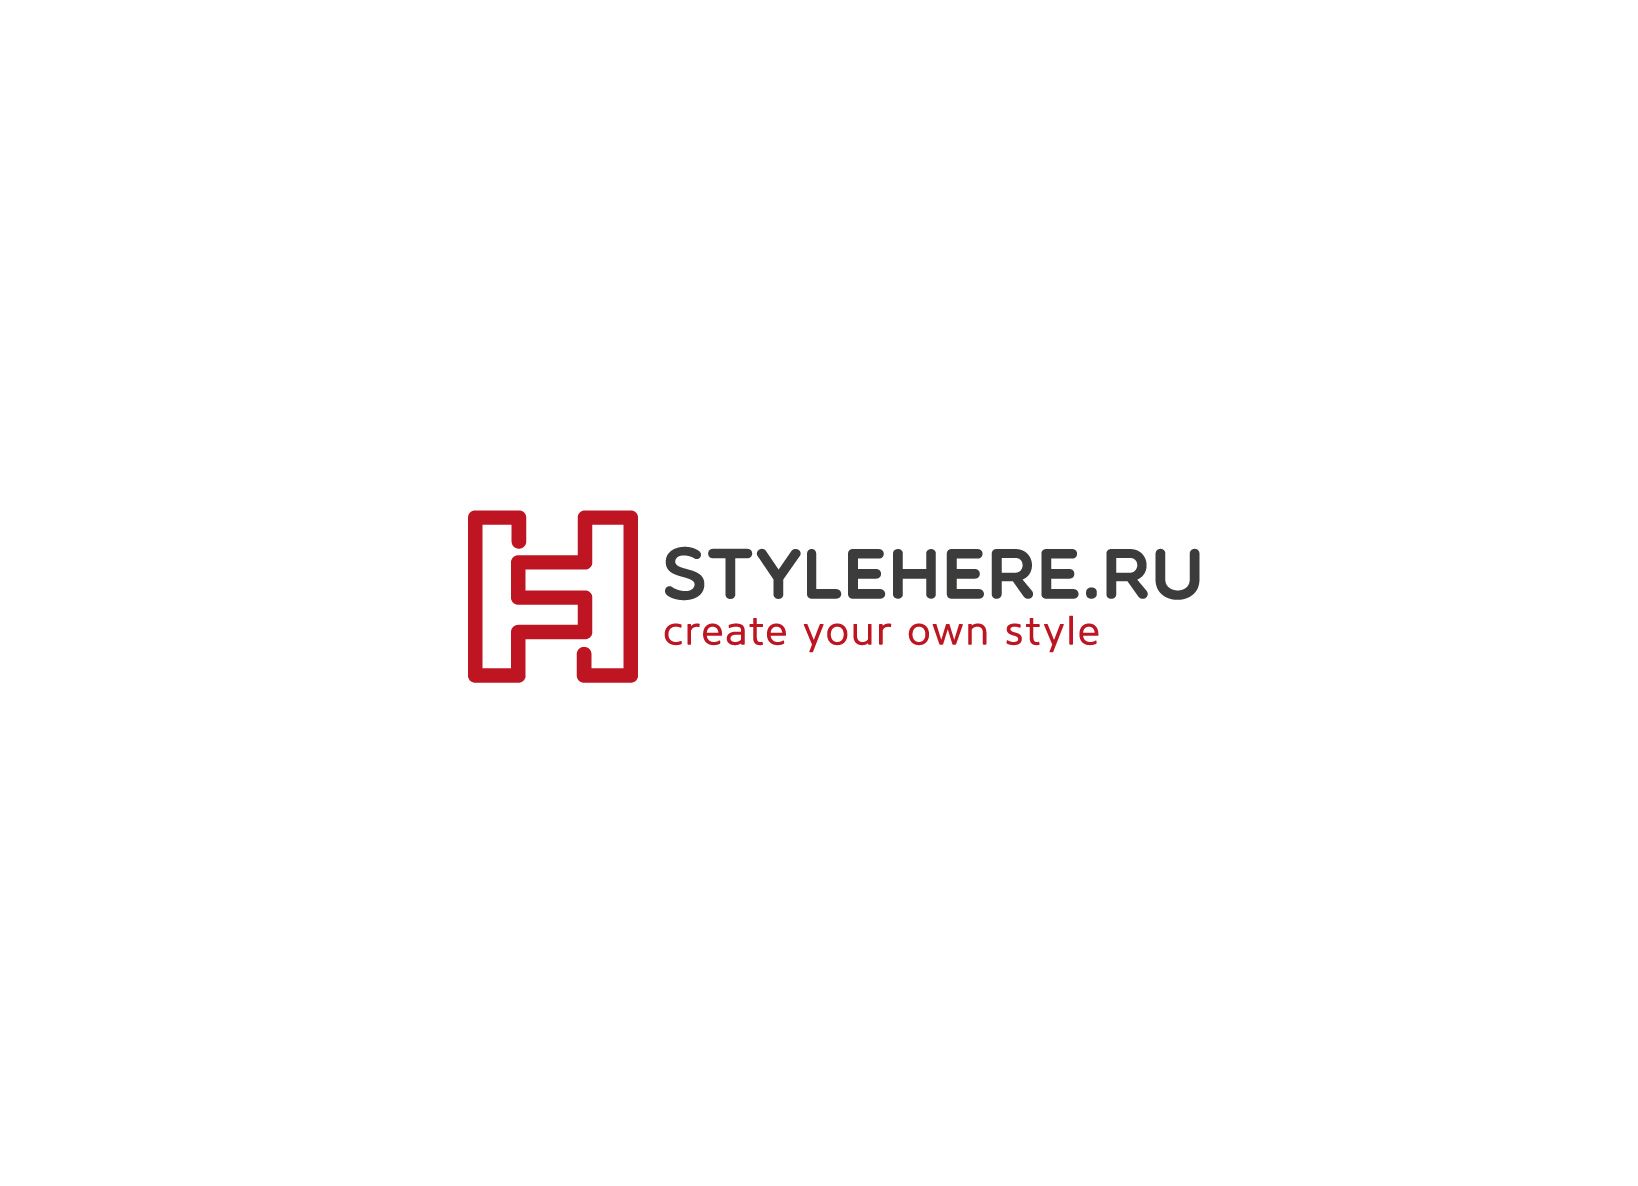 Логотип для интернет-магазина stylehere.ru - дизайнер U4po4mak